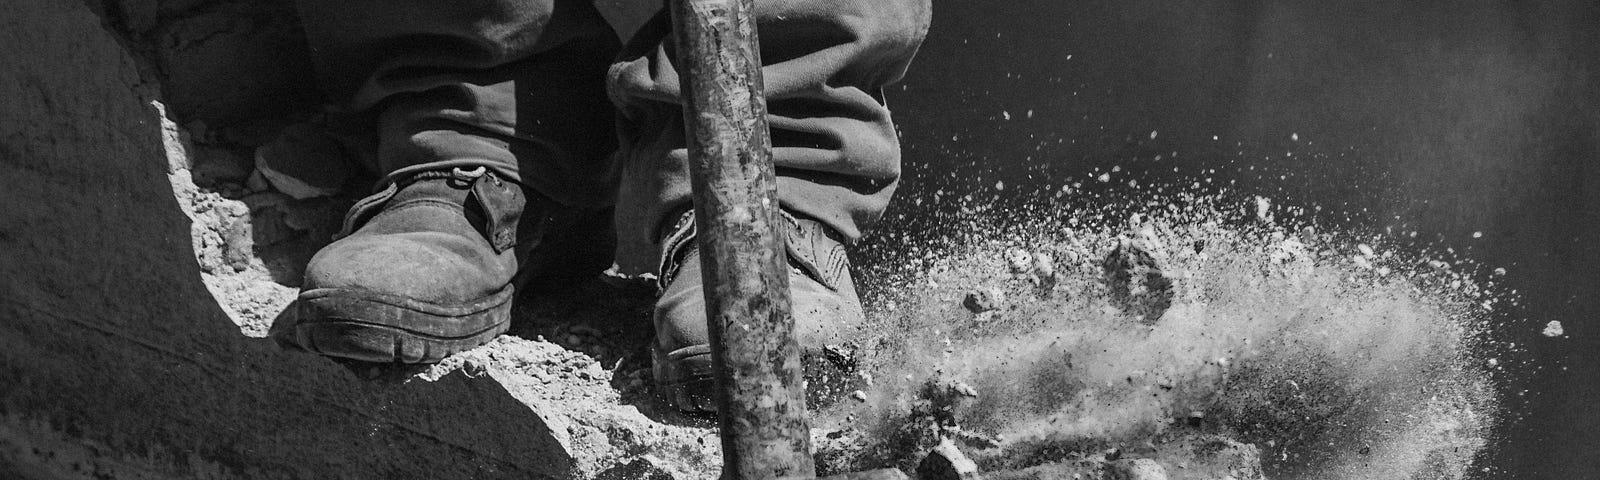 Black and white, sledge hammer breaking concrete